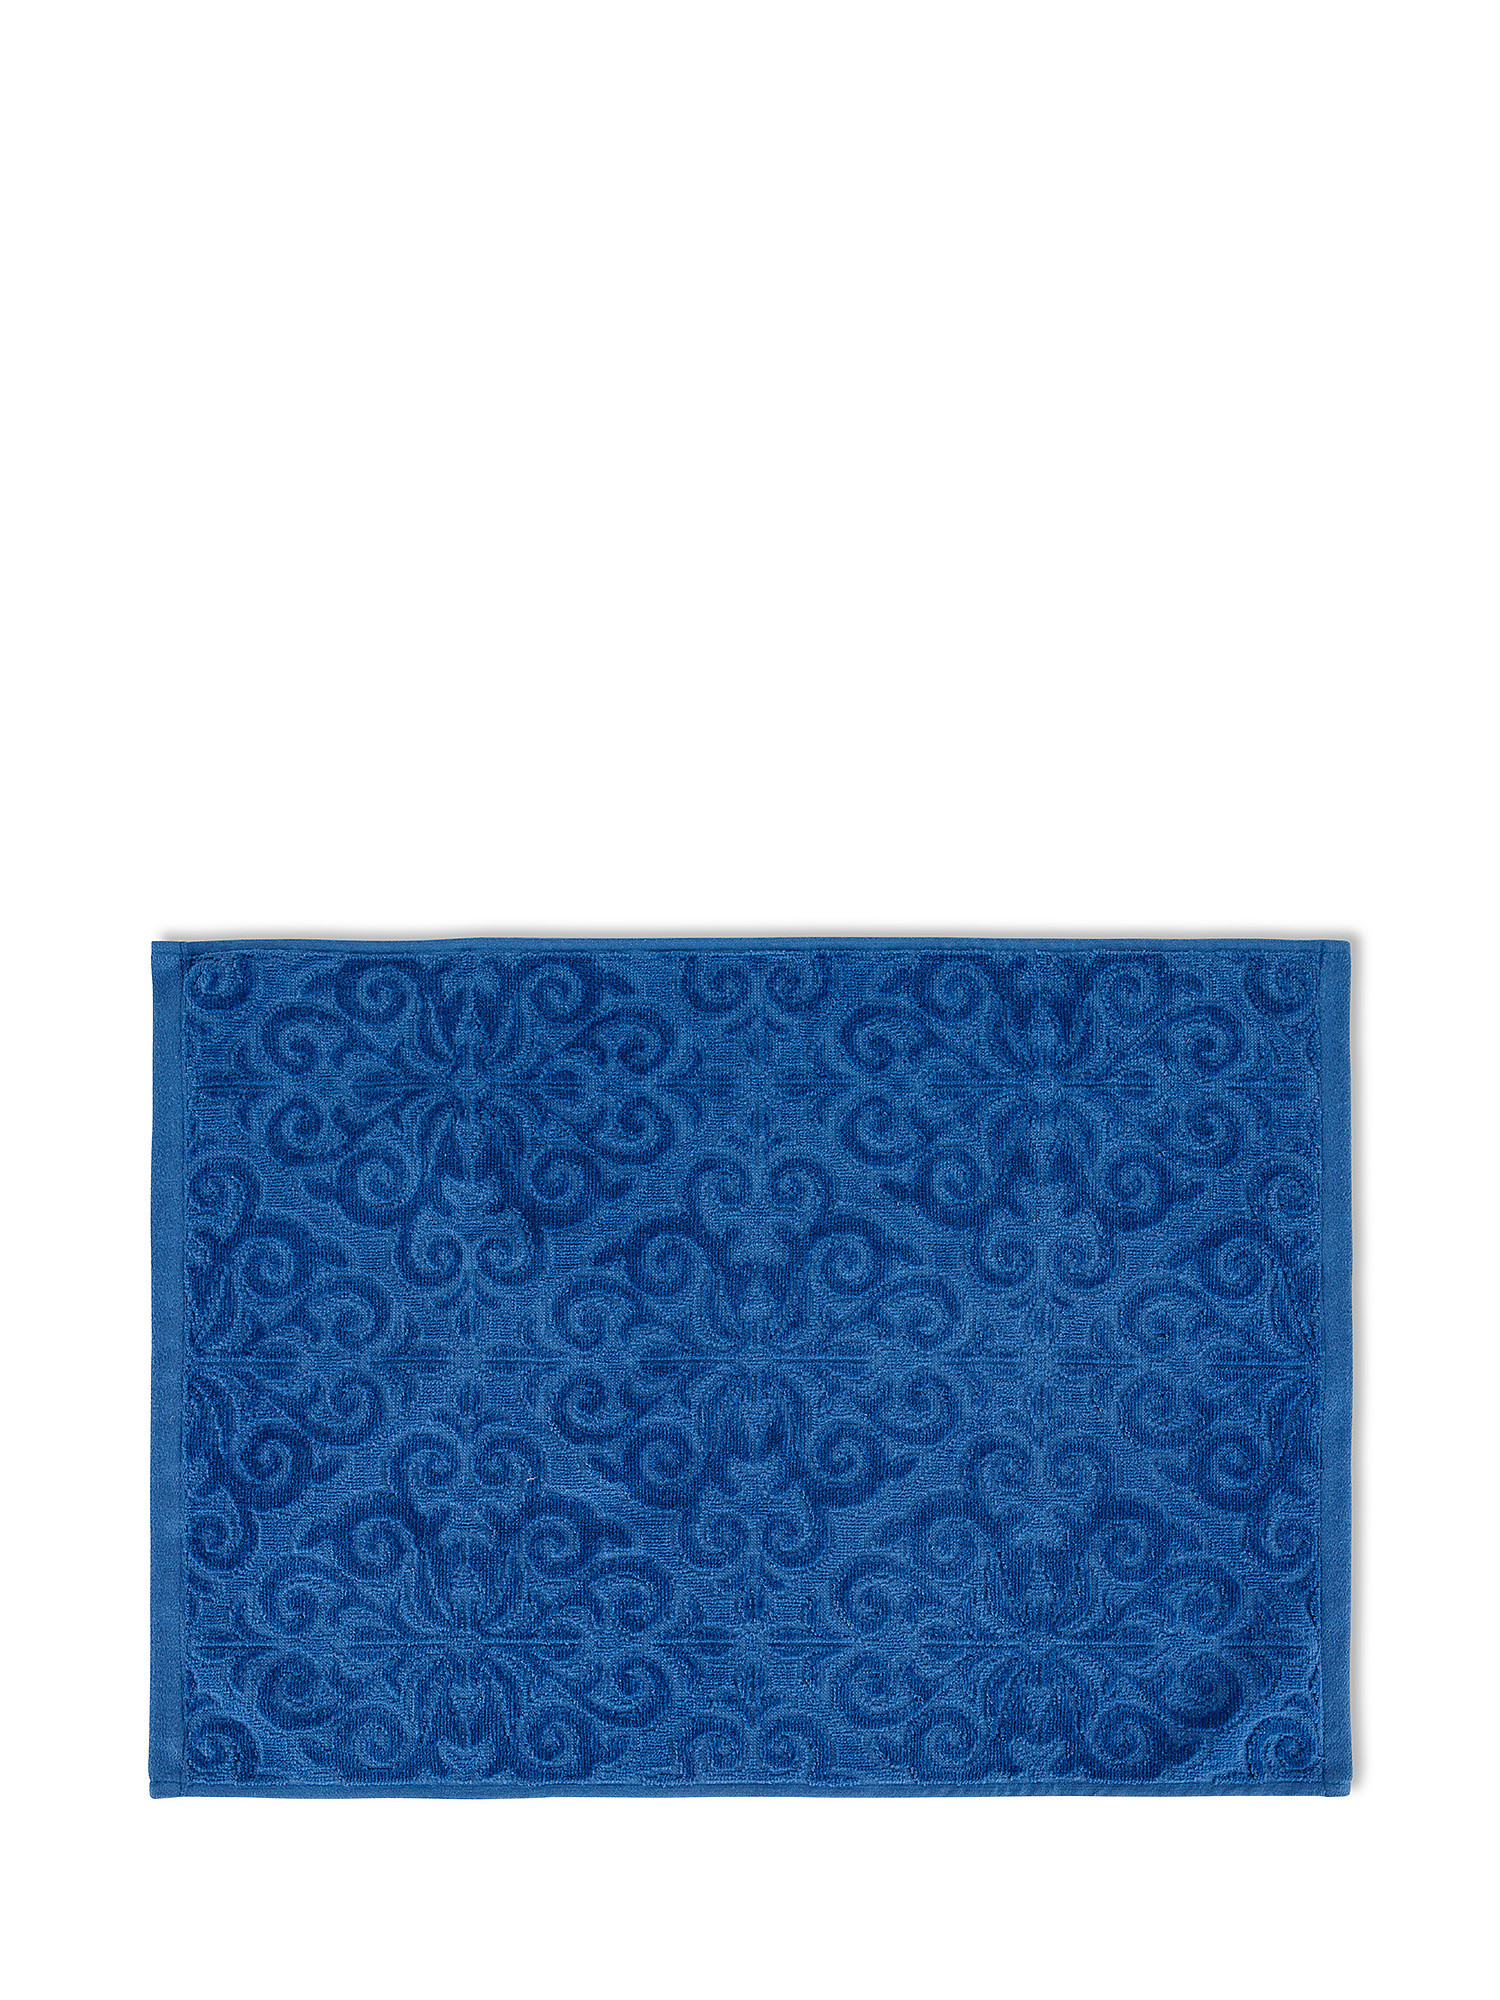 Asciugamano cotone velour motivo azulejos, Blu, large image number 1